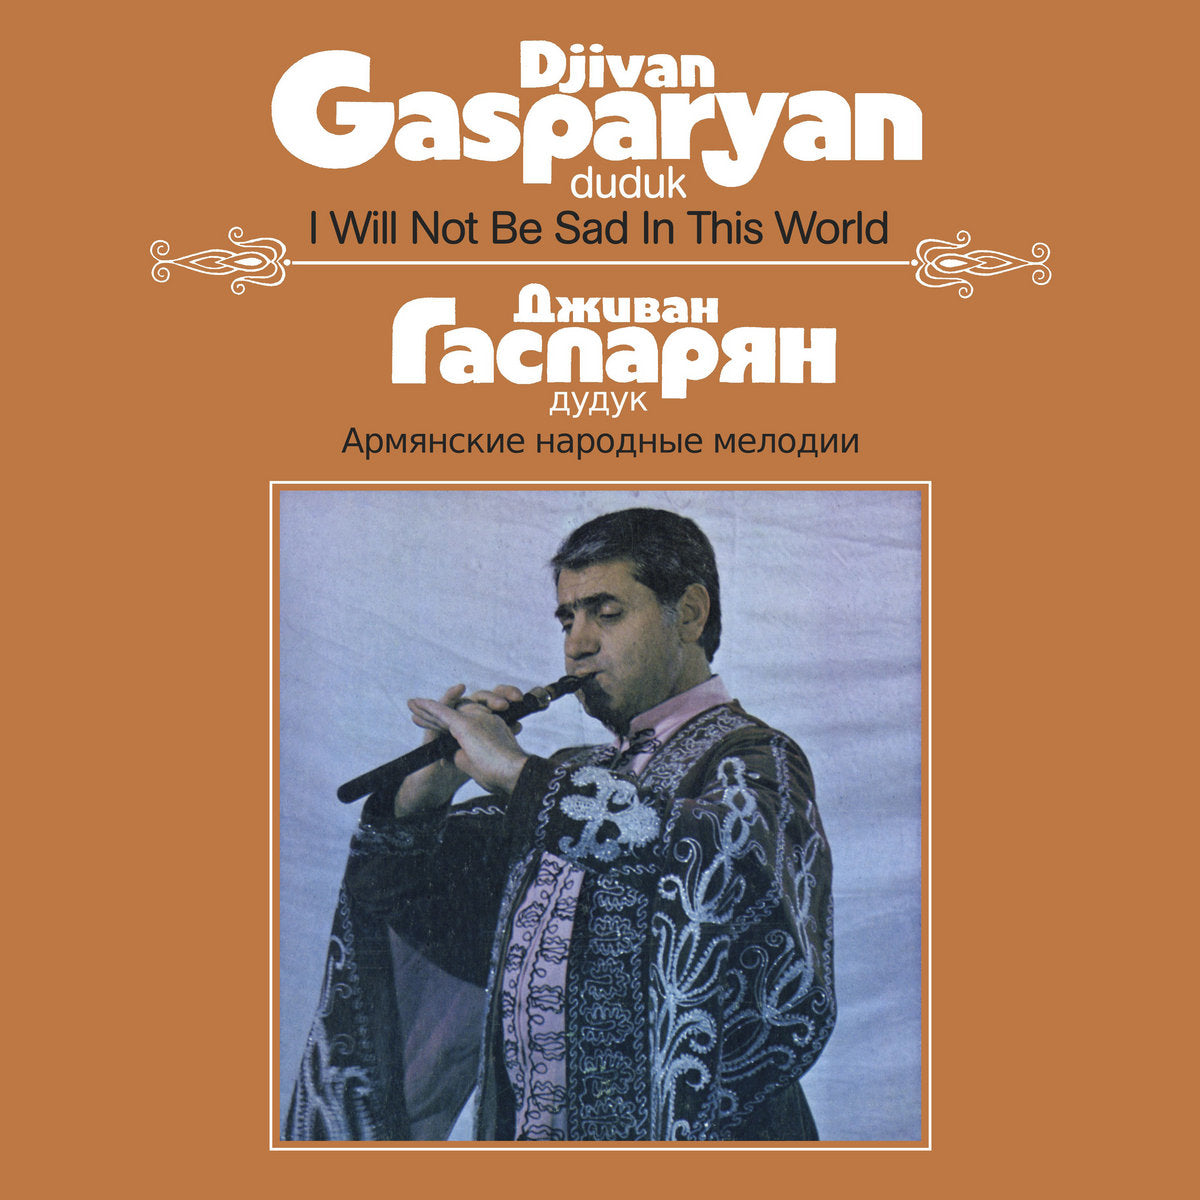 【LP】Djivan Gasparyan - I Will Not Be Sad In This World +DL